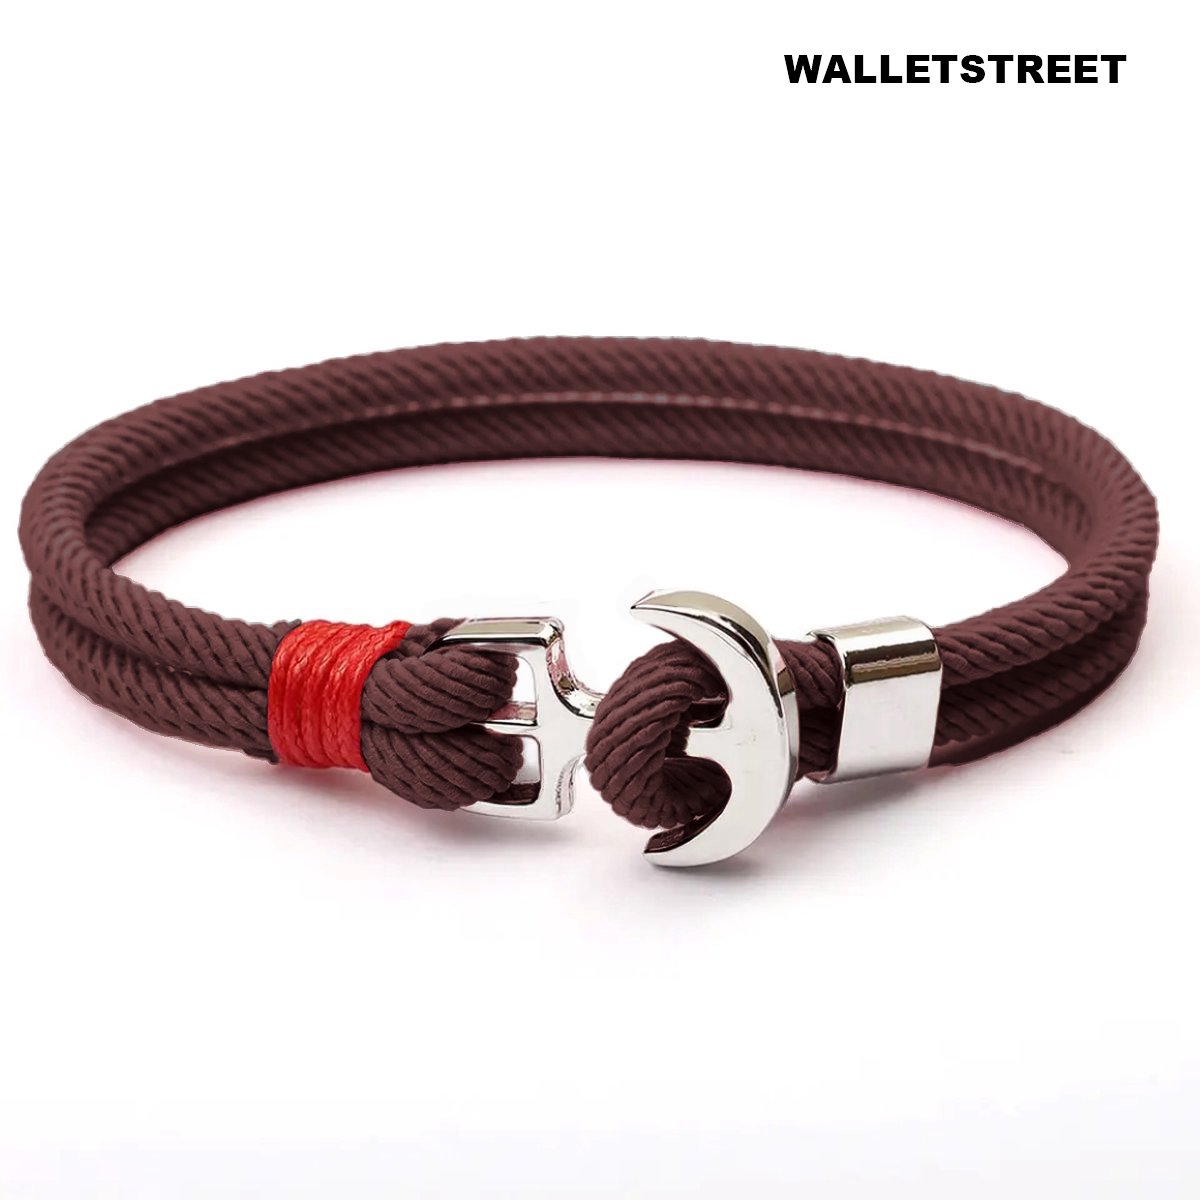 Walletstreet Rope Chain Anker Armband-Bruin- Armband 21 cm-voor mannen en vrouwen-Kerstcadeau-Ideale geschenk